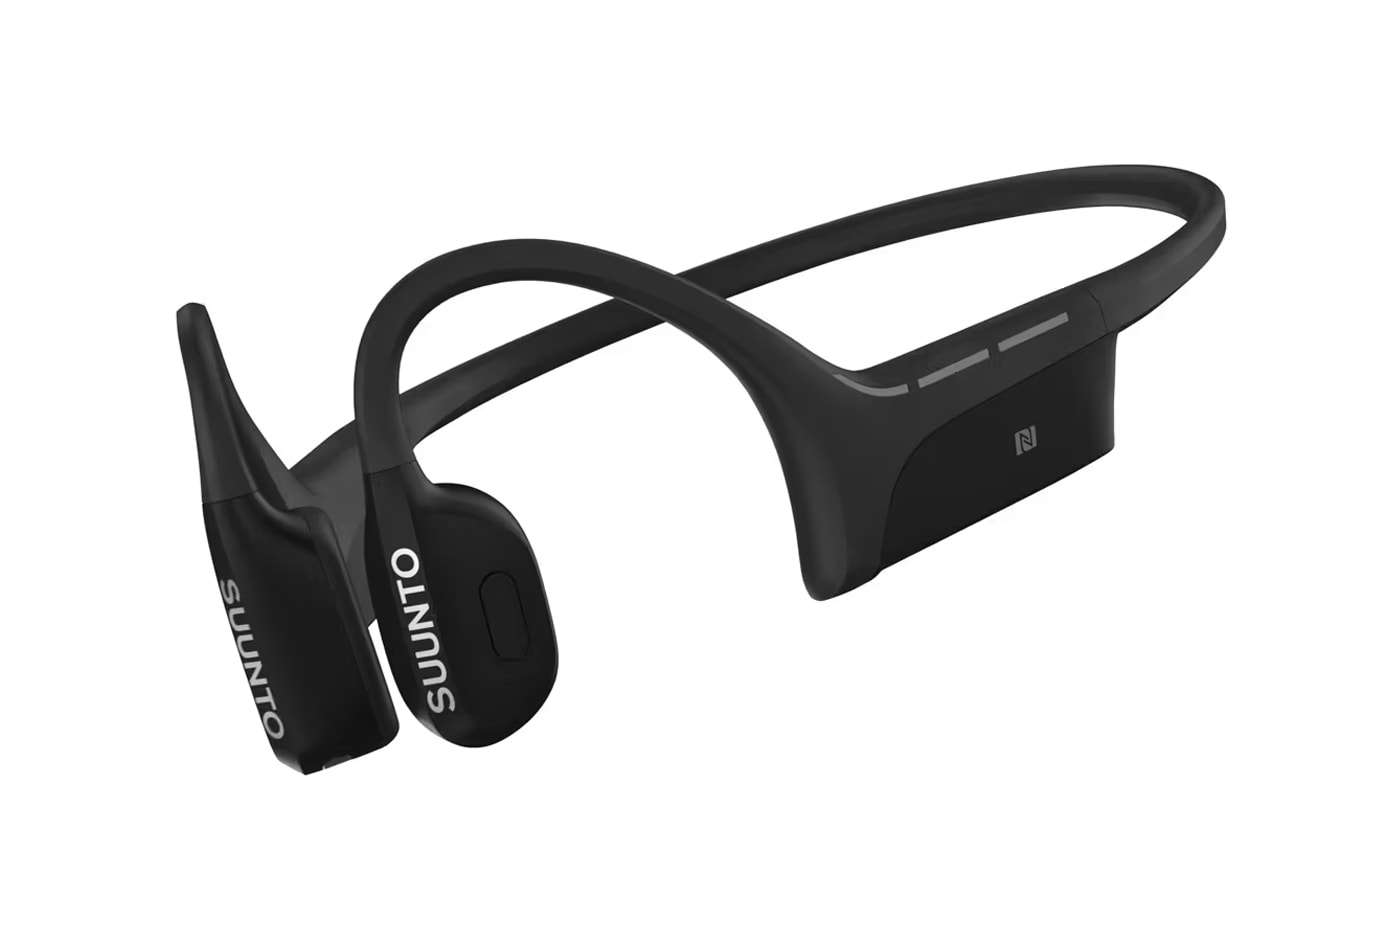 suunto wing headphones bone conduction technology over the ear open air design titanium silicone materials price specs buy